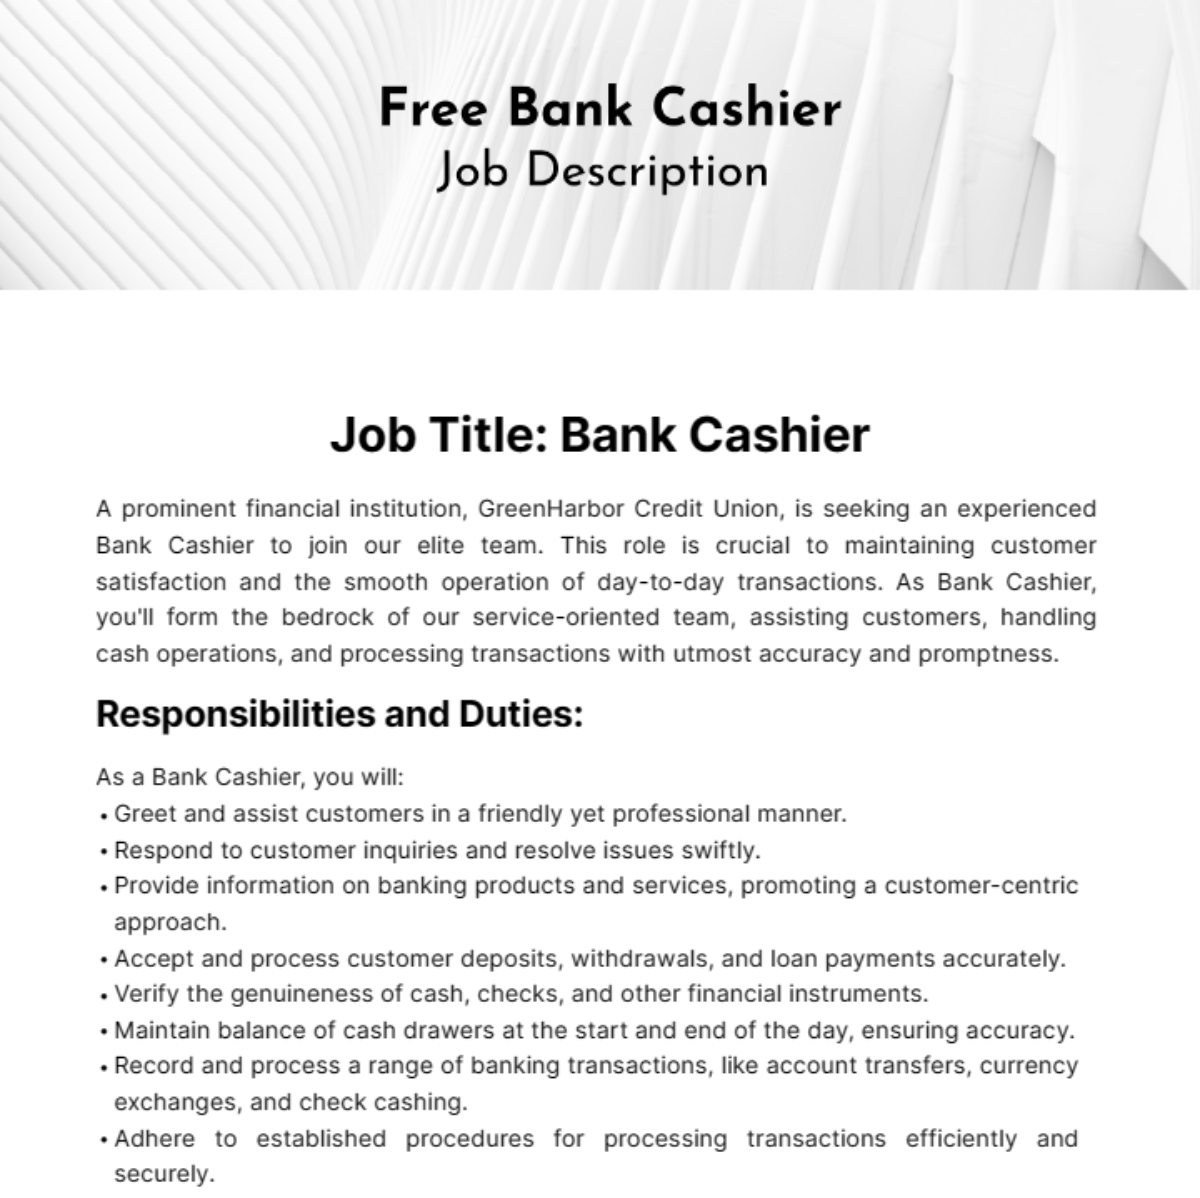 Free Bank Cashier Job Description Template